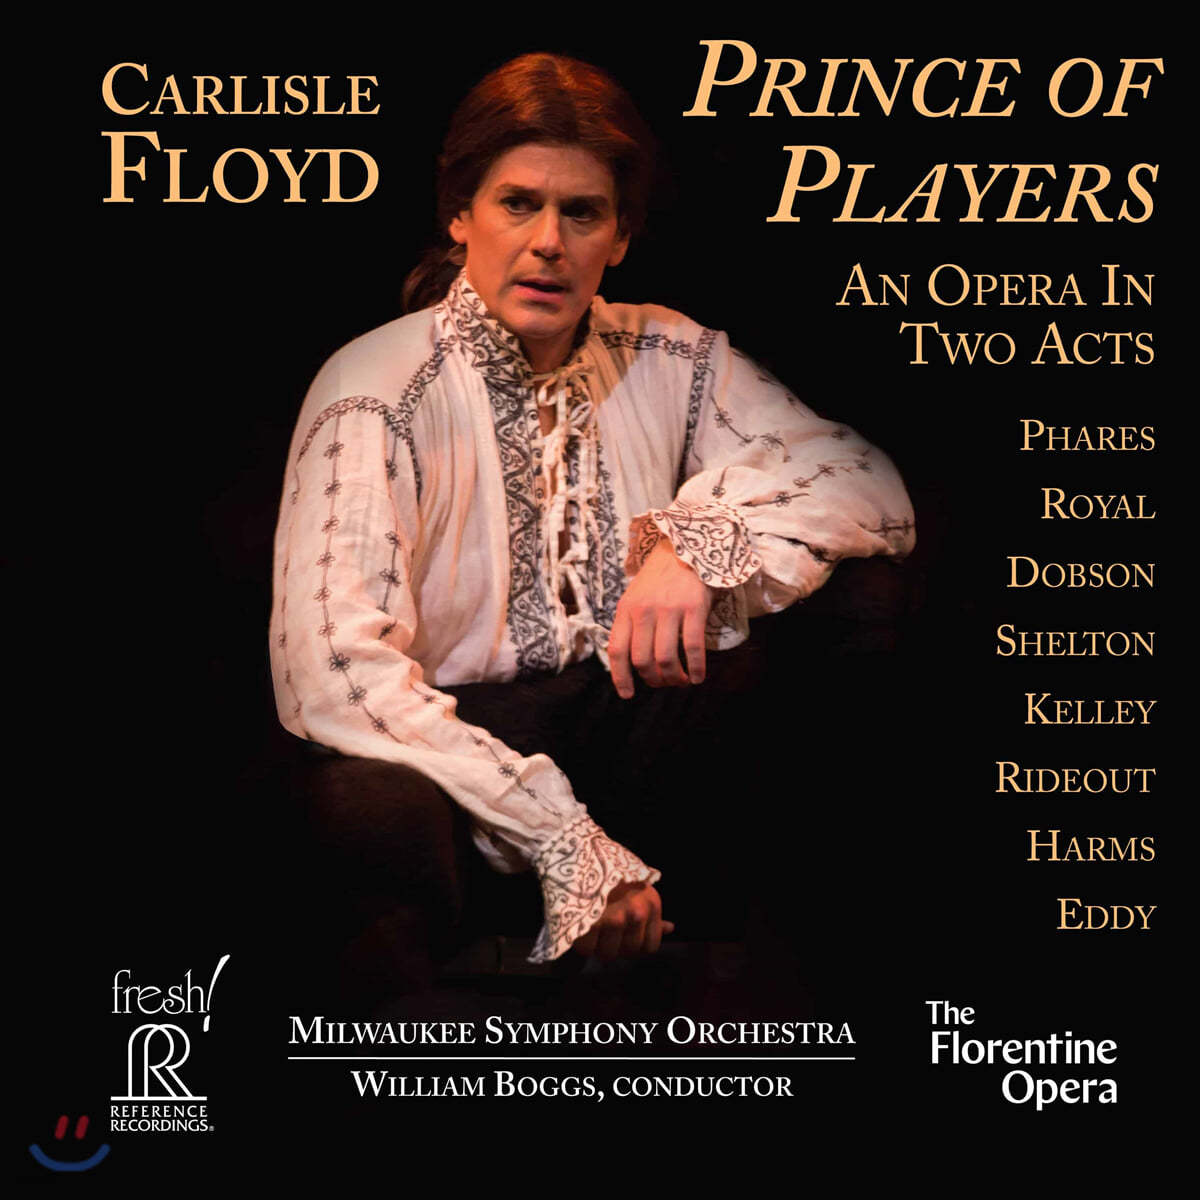 Florentine Opera 칼리슬 플로이드: 2막 오페라 (Carlisle Floyd: Prince of Players - An Opera in Two Acts) 